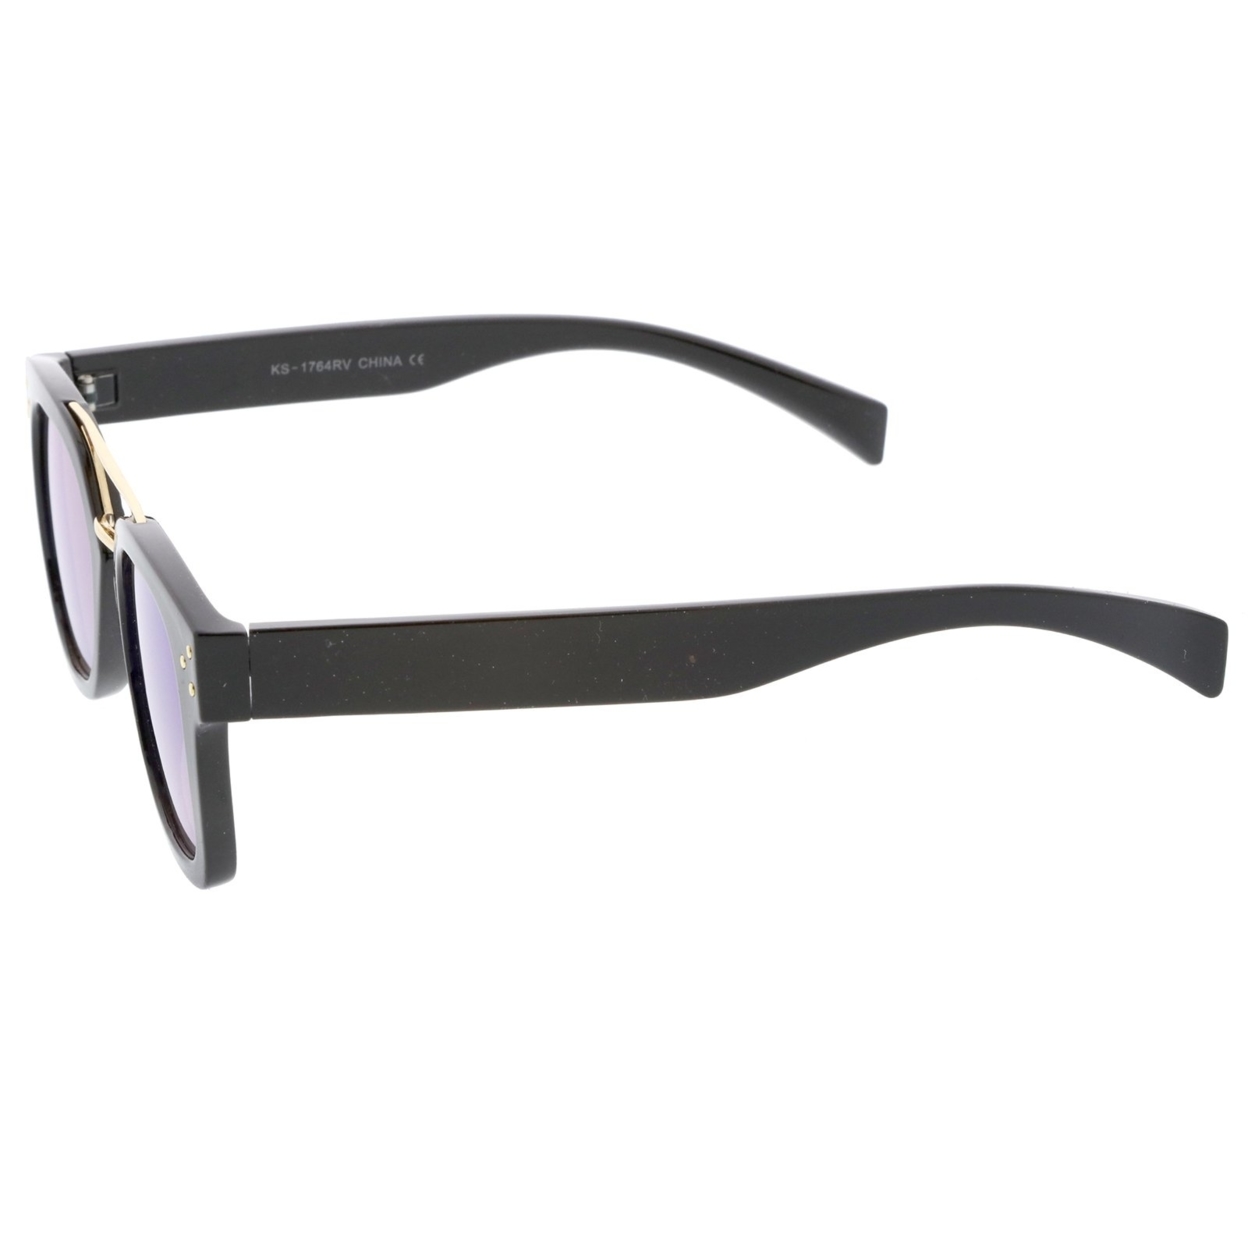 Modern Horn Rim Metal Crossbar Square Flat Mirrored Lens Aviator Sunglasses 48mm - Green Marble / Blue Mirror